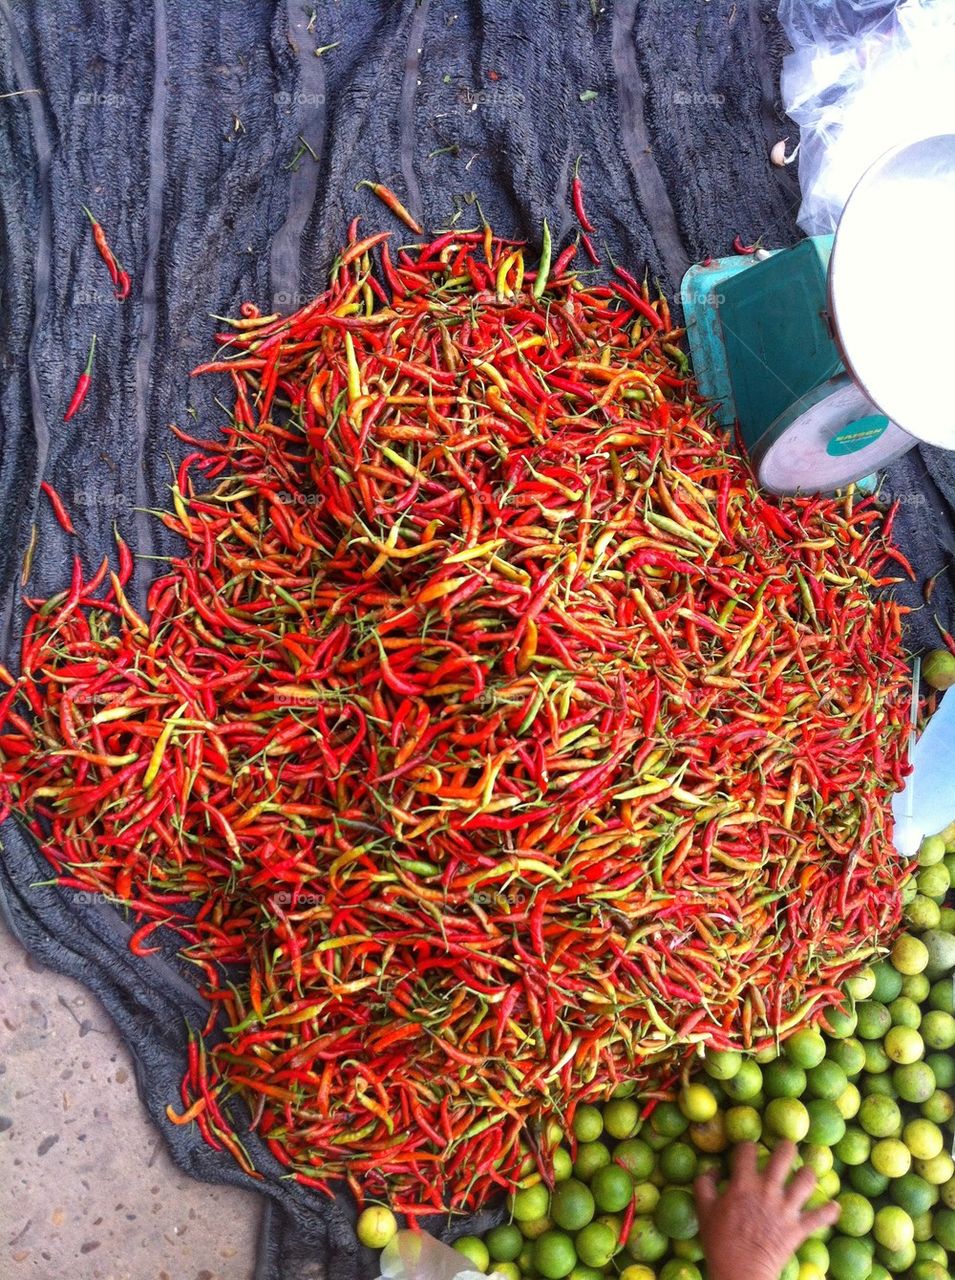 Chilli pepper mound in Bangkok